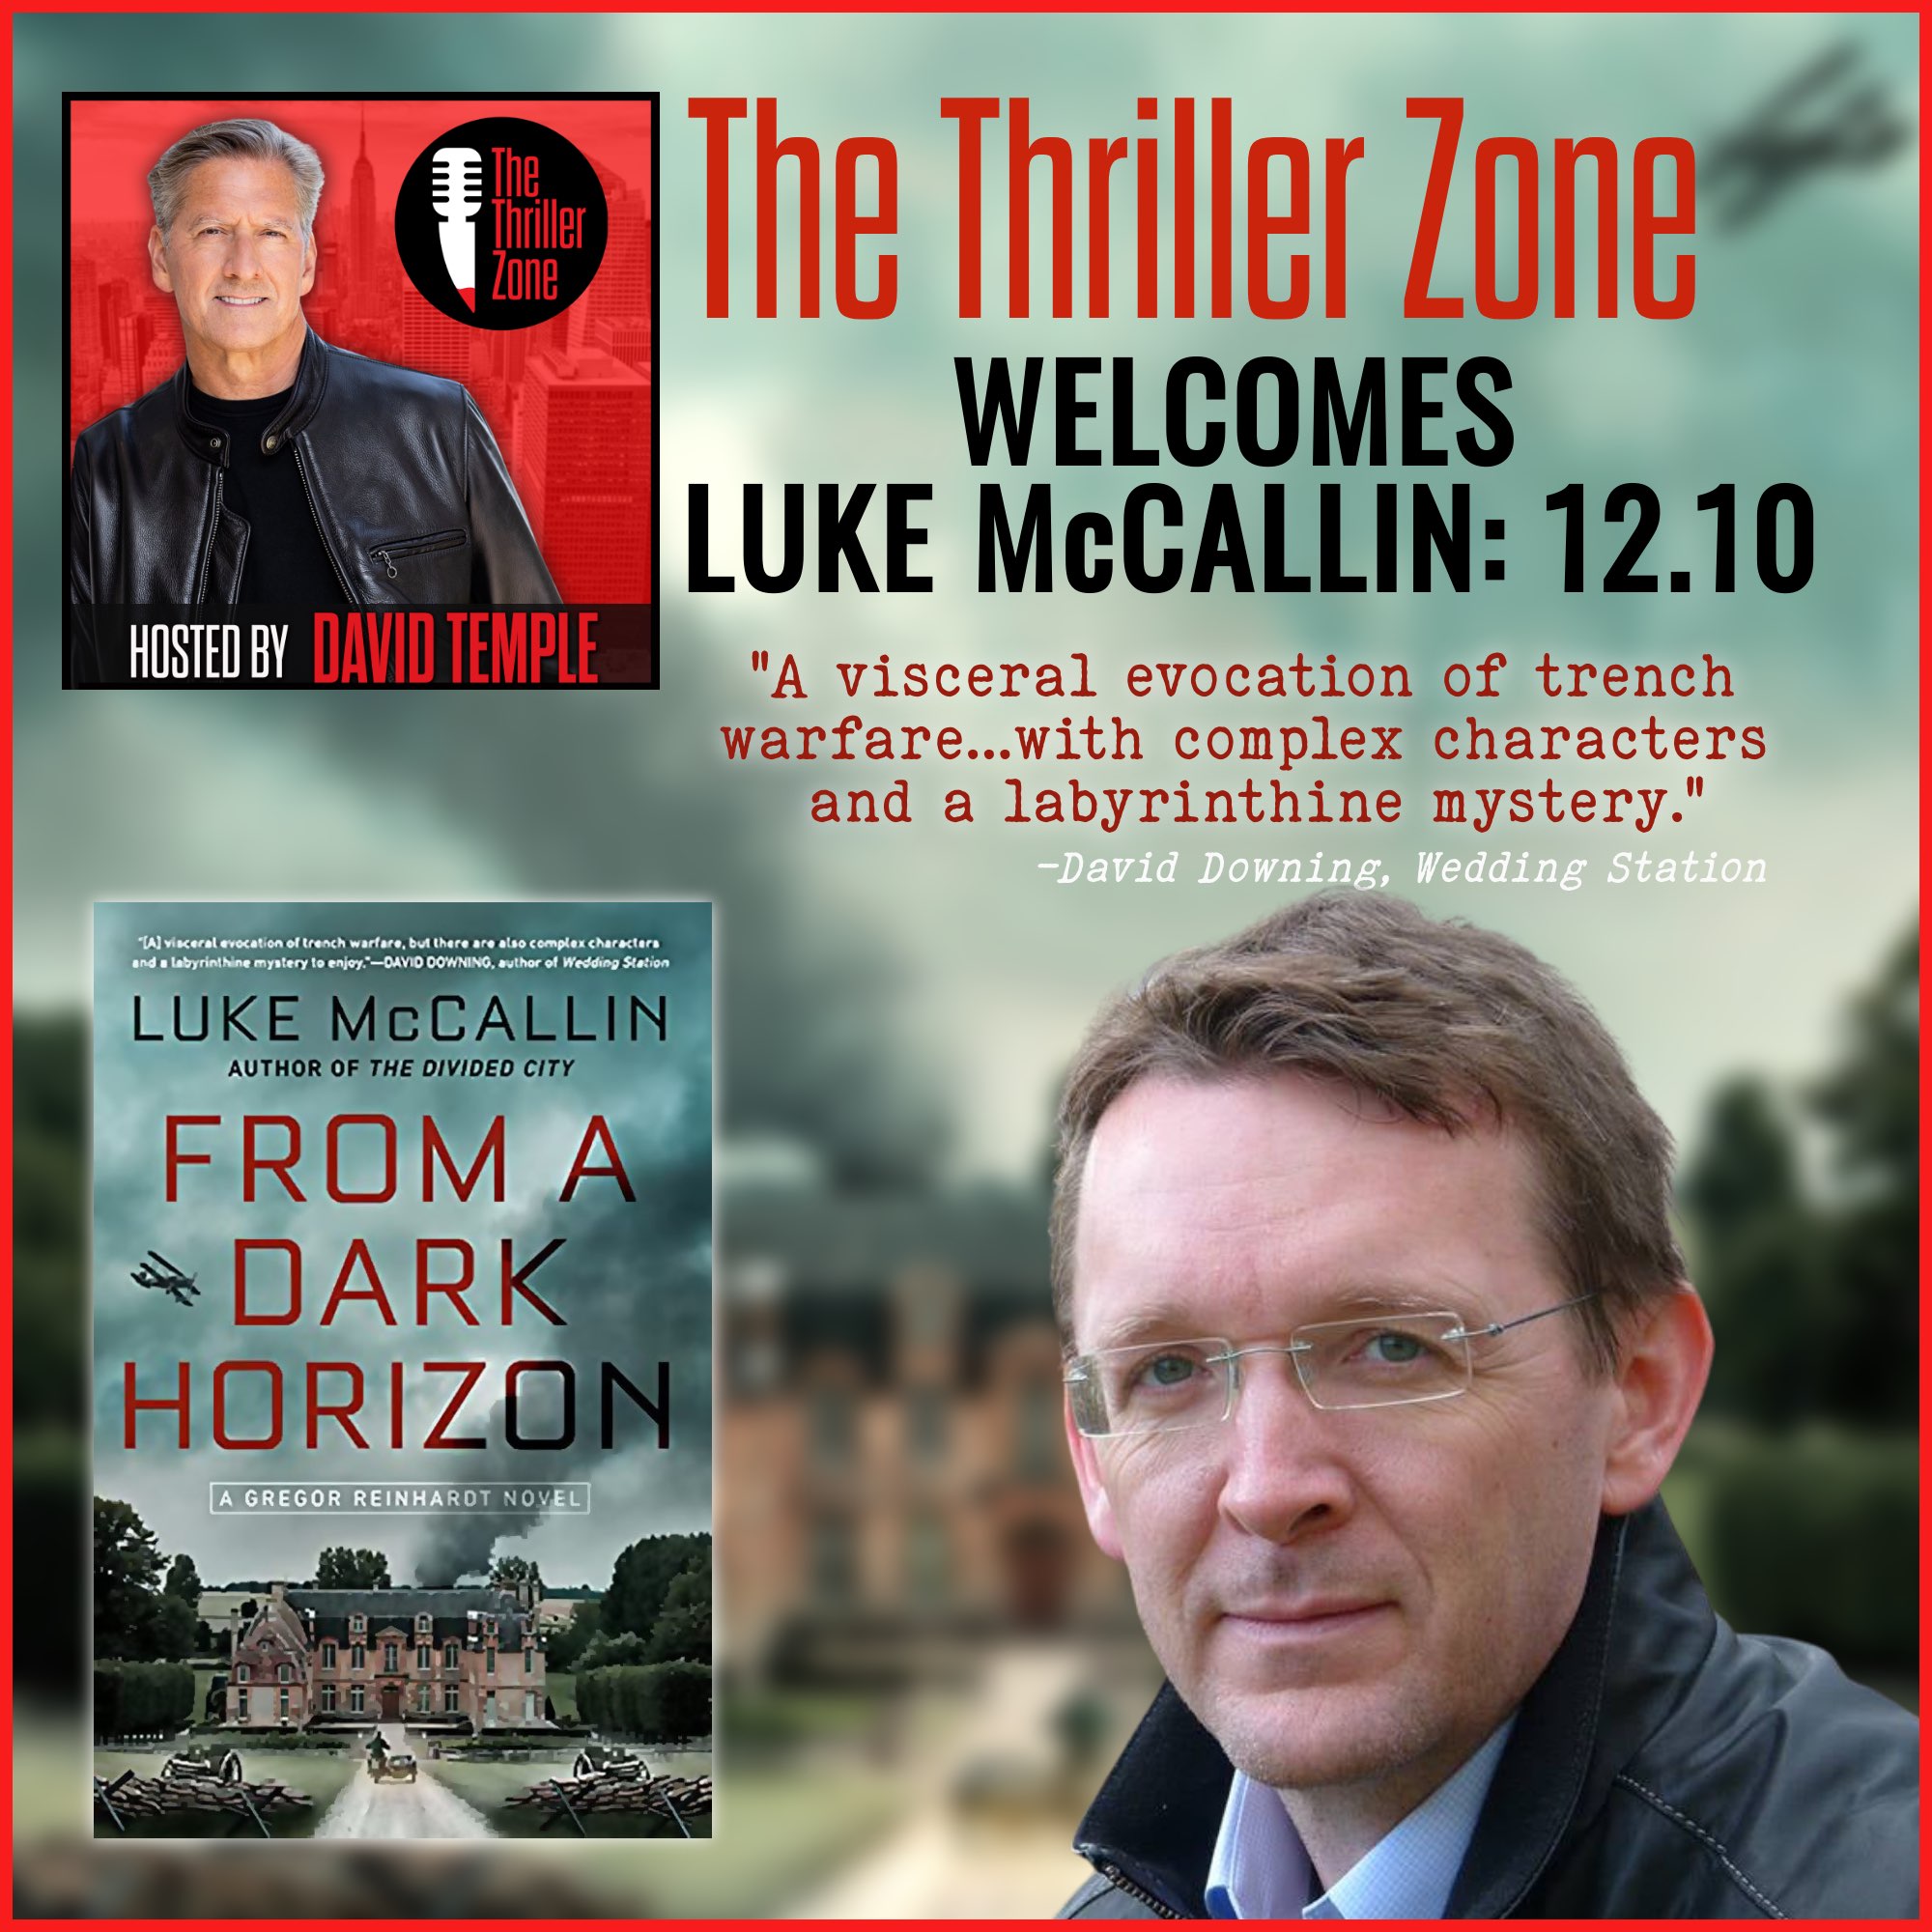 Luke McCallin Historical Thriller Author Image